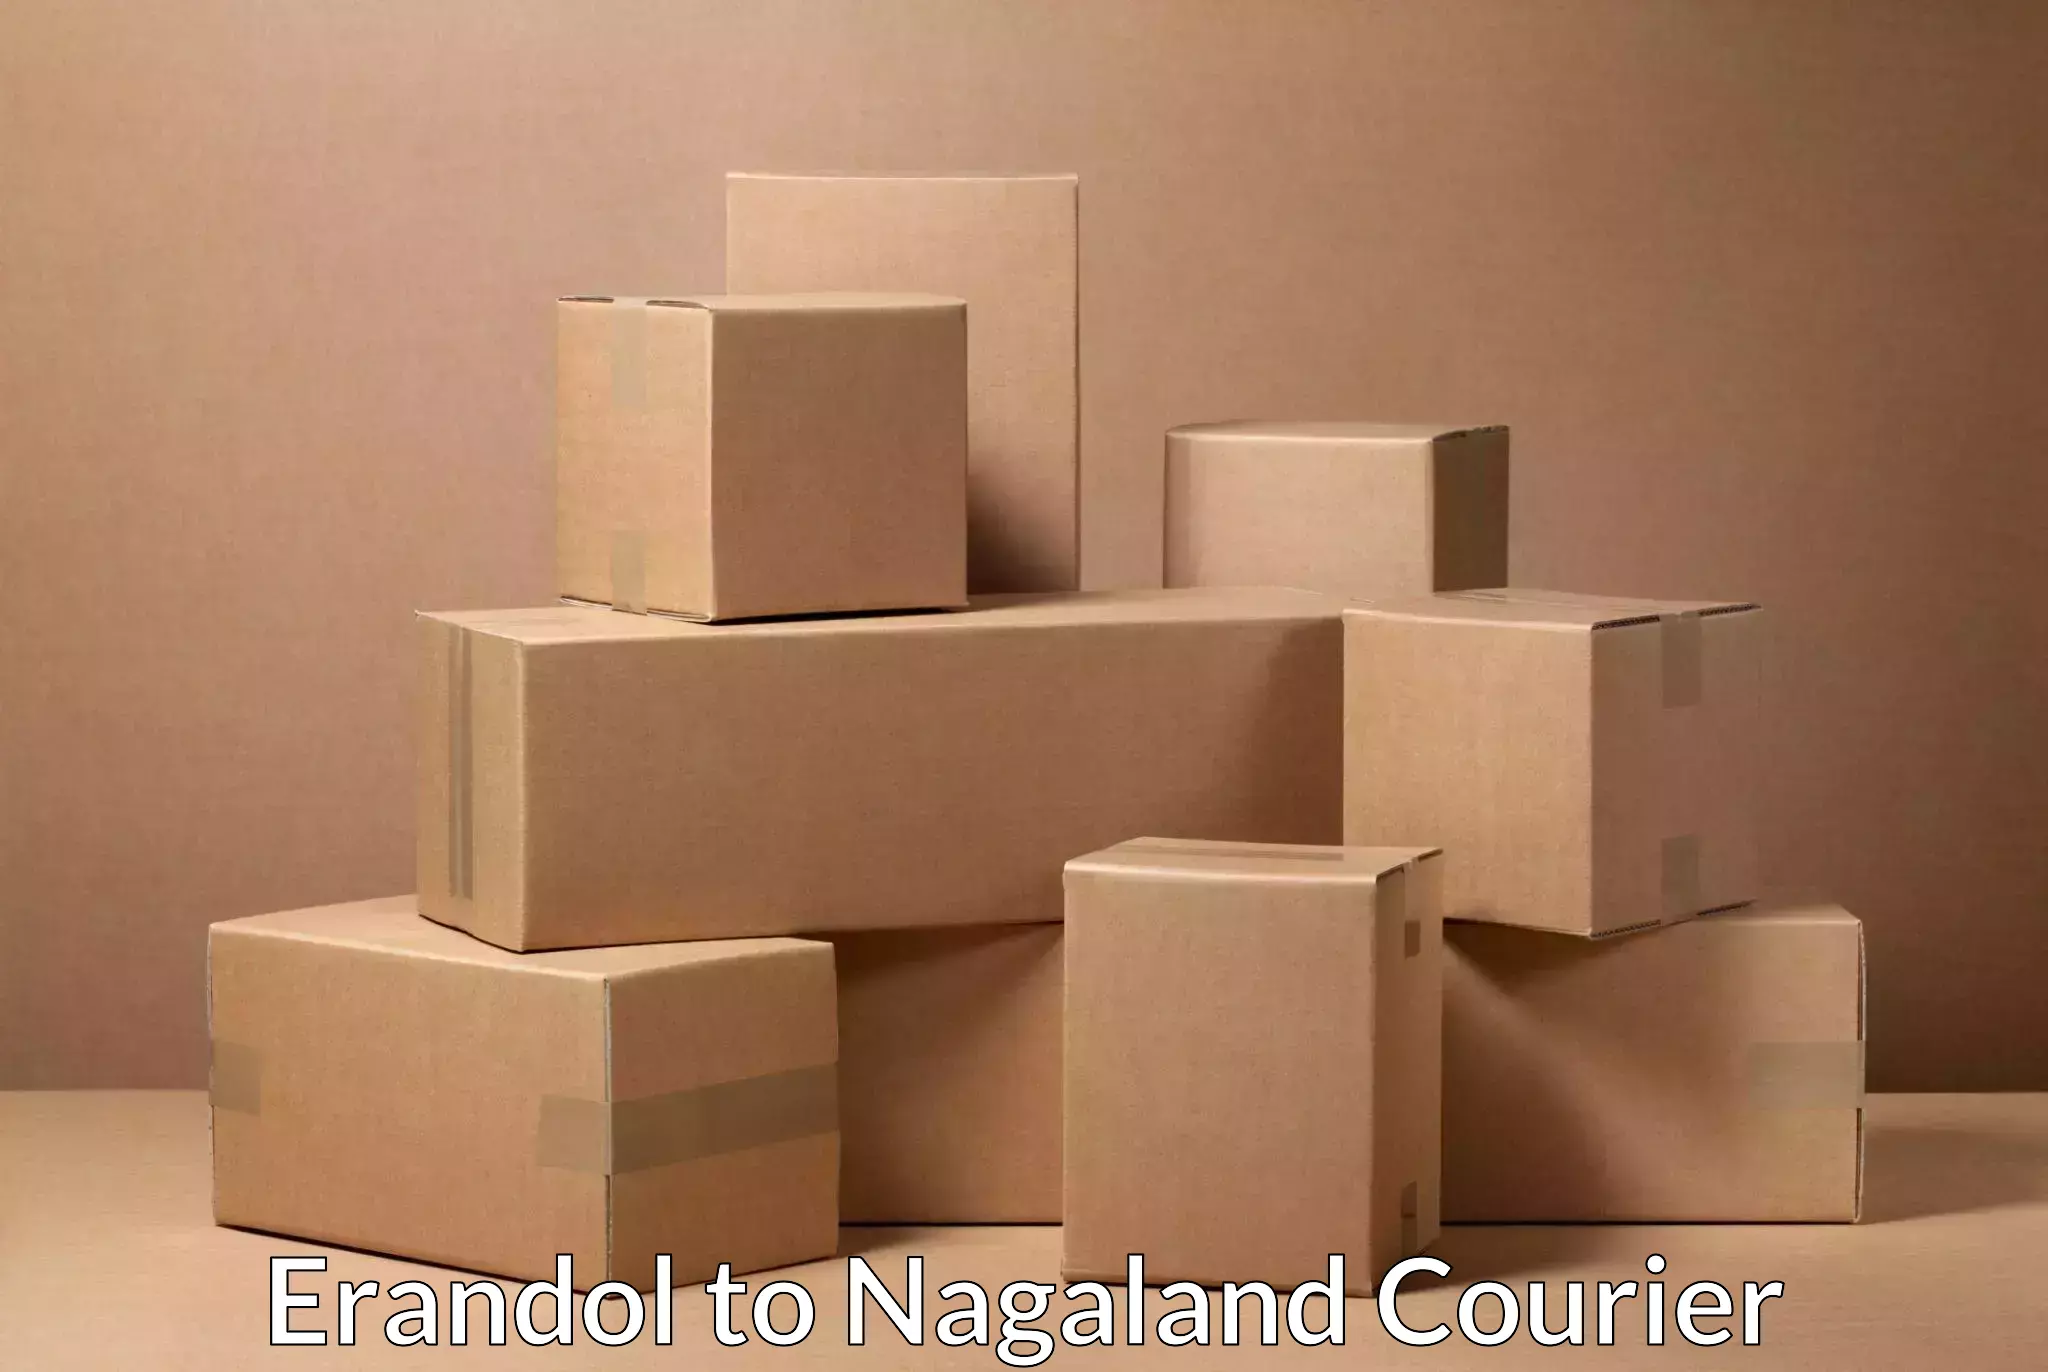 Logistics efficiency Erandol to Nagaland